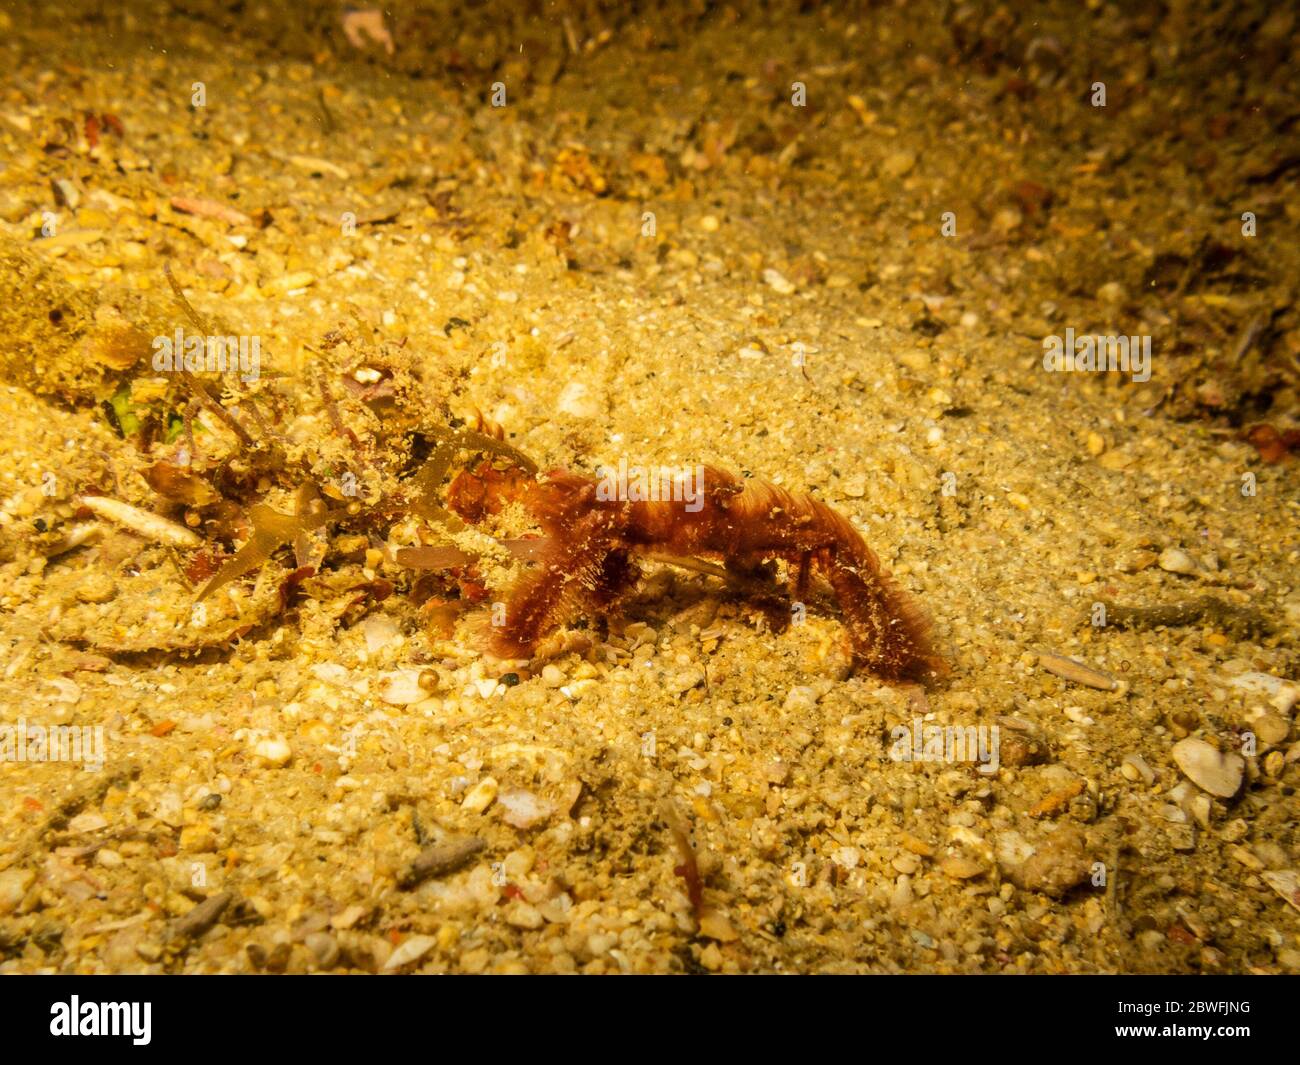 Orangutan crab (Achaeus japonicus) also known as a decorator crab shot in a Puerto Galera reef, Philippines Stock Photo